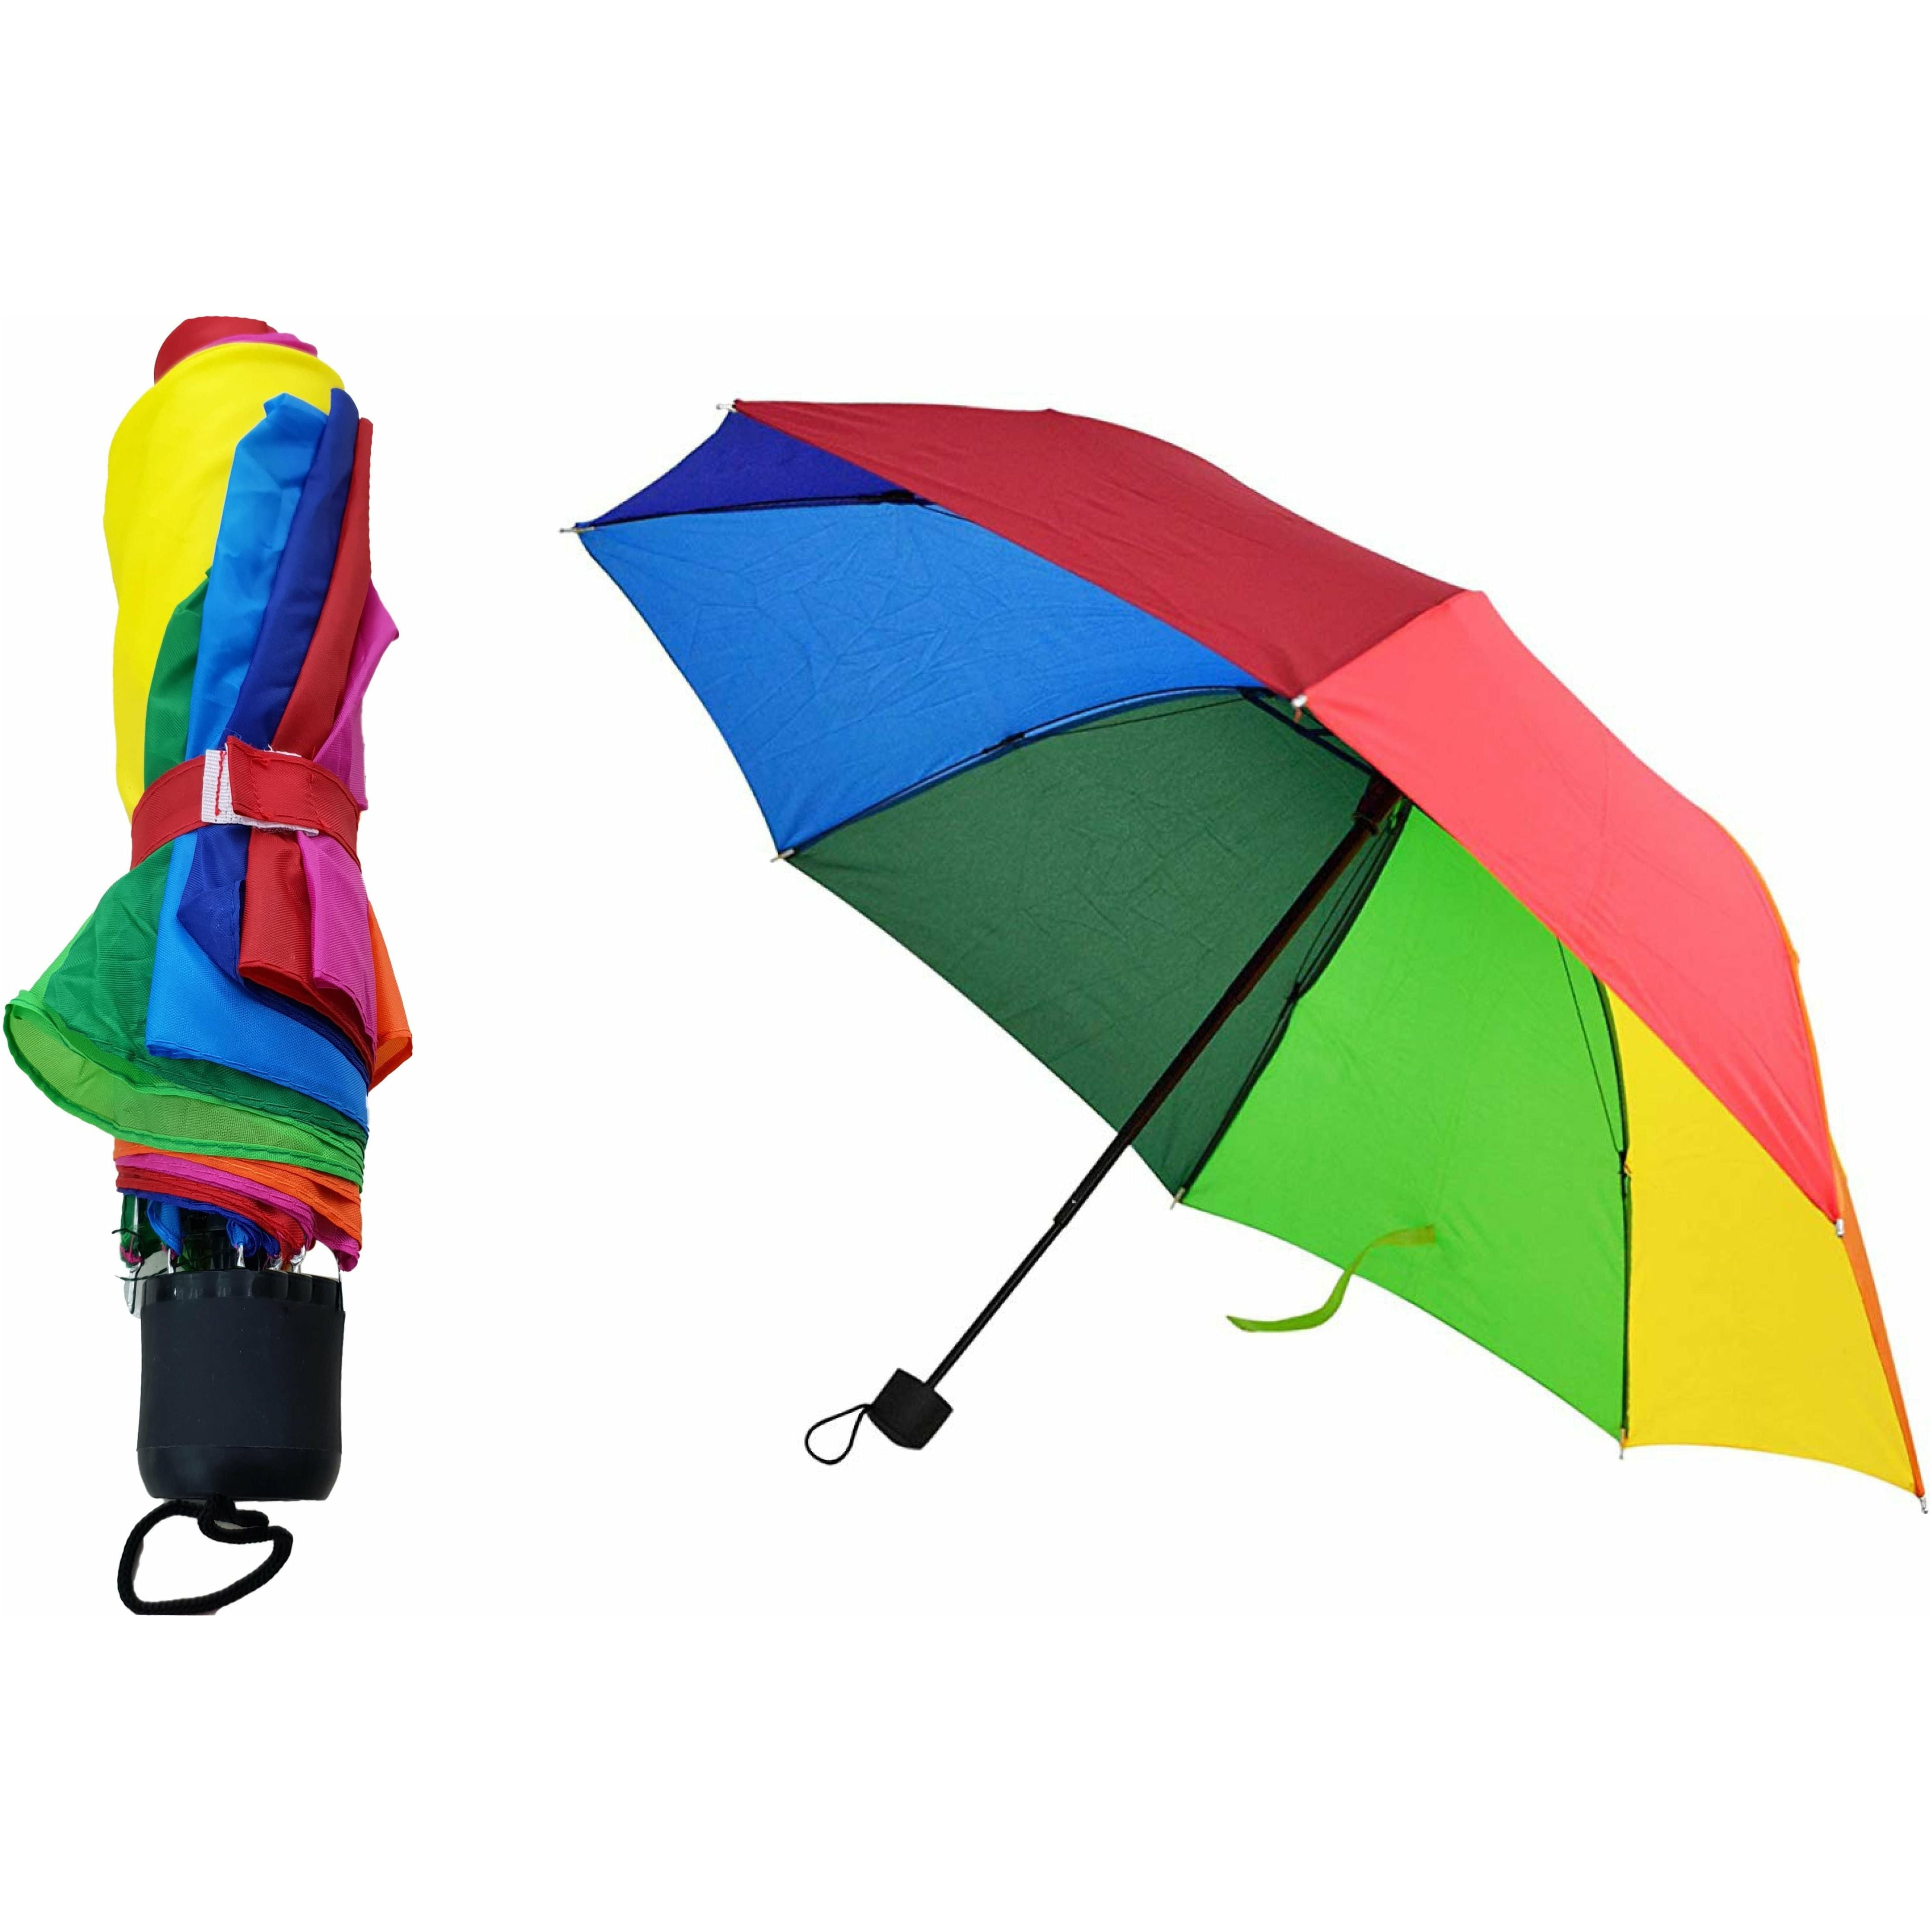 Rainbow Compact Foldable Umbrella - 93x55cm 1 Piece - Dollars and Sense